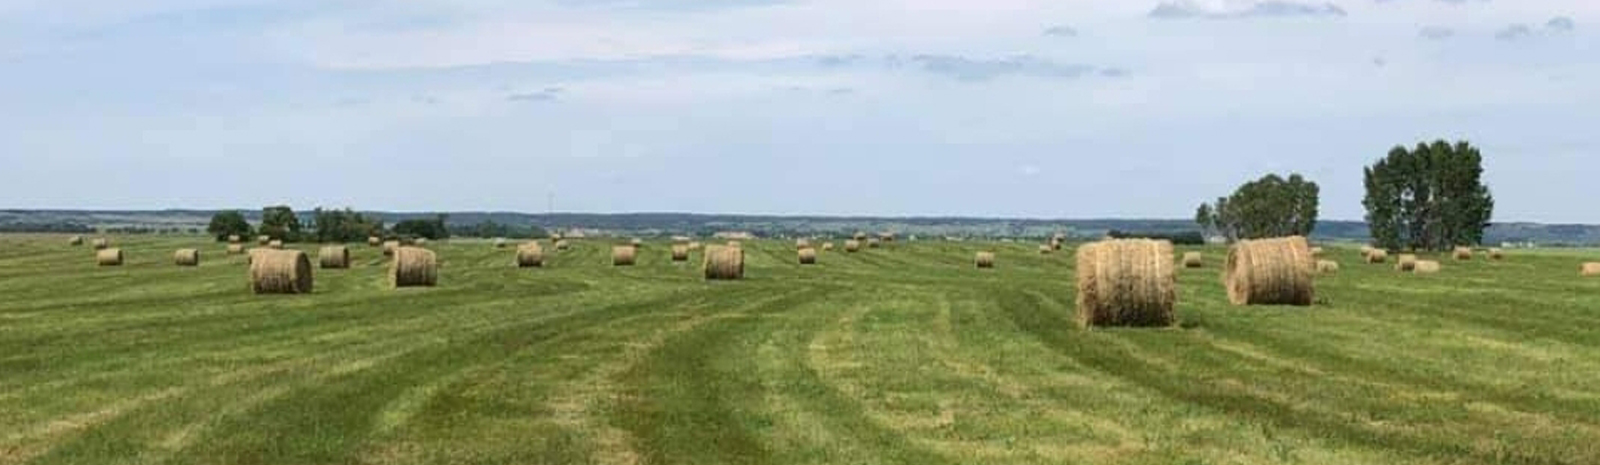 Hay bales in field.